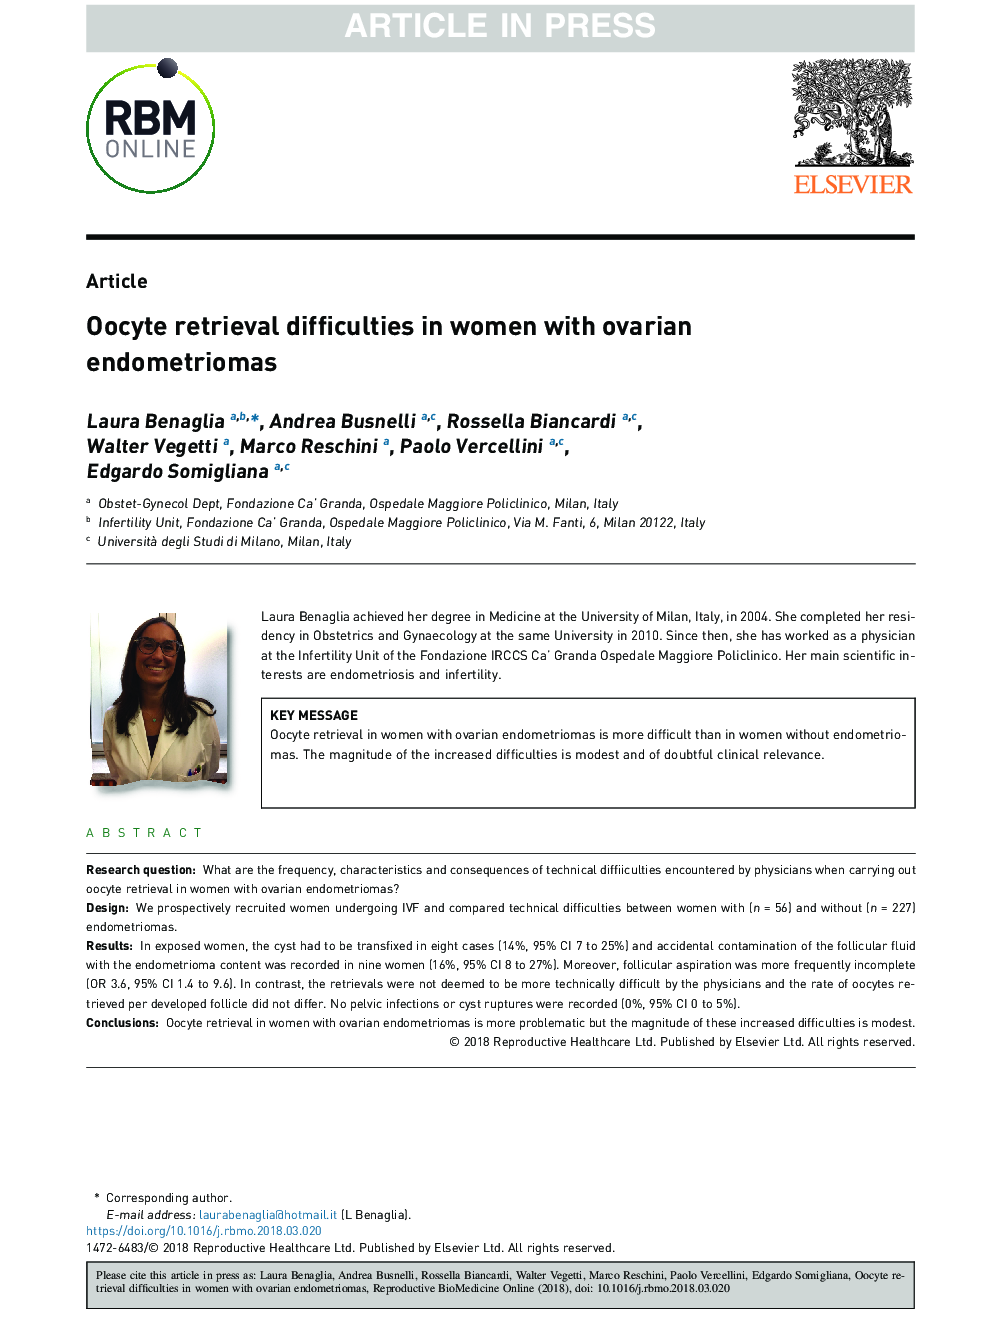 Oocyte retrieval difficulties in women with ovarian endometriomas